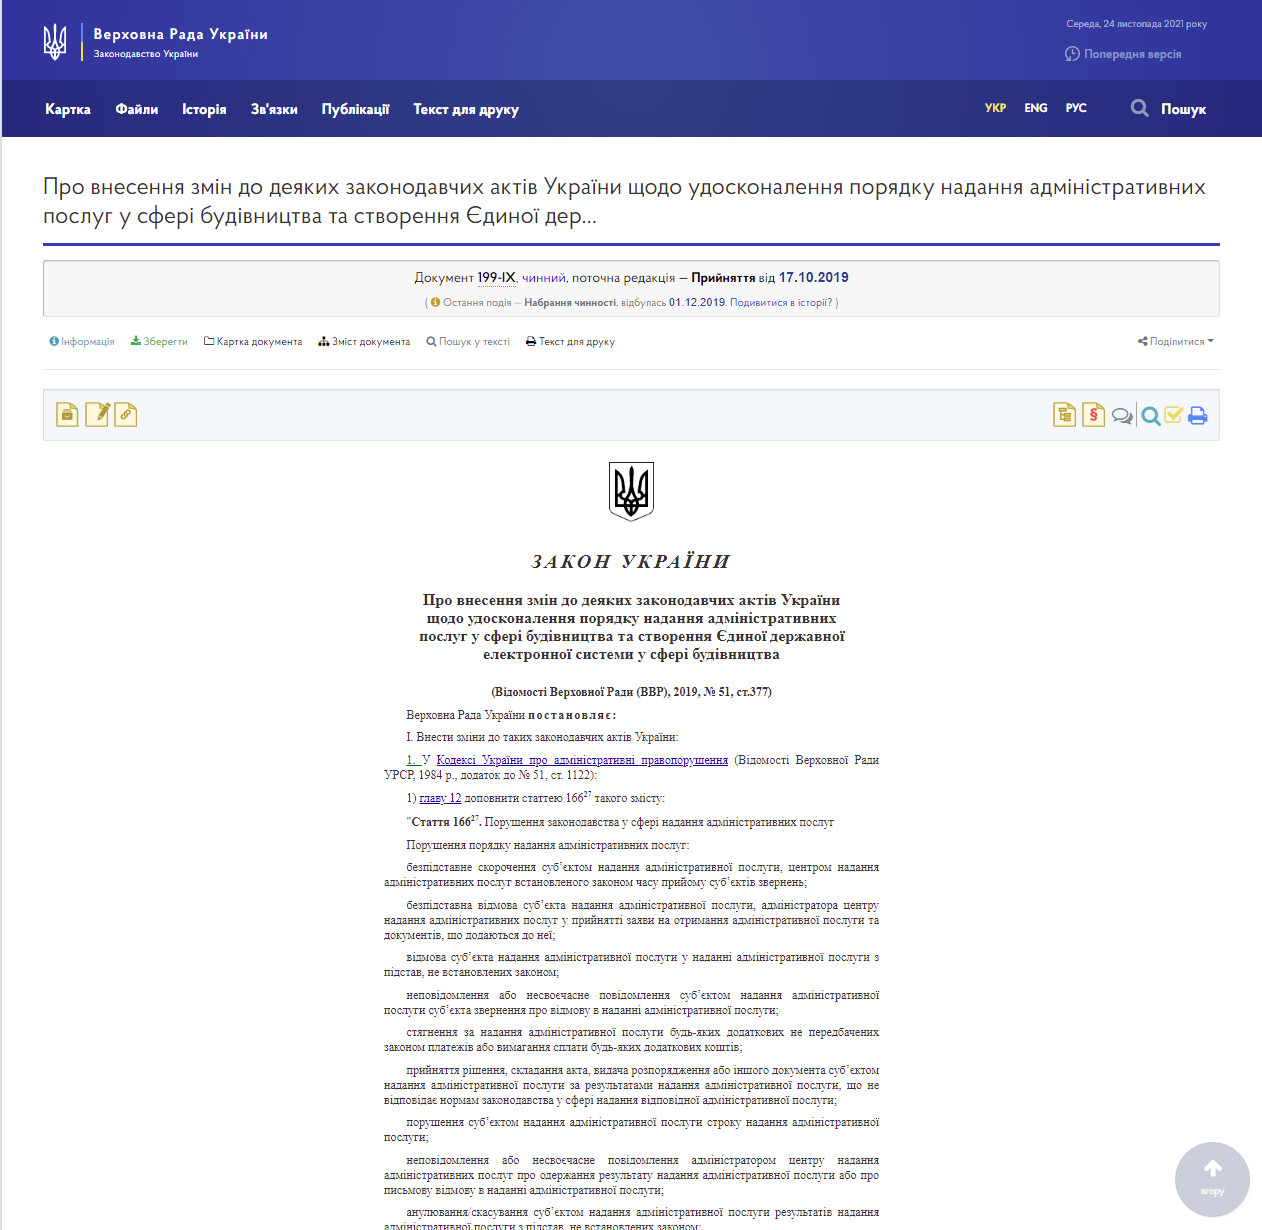 https://zakon.rada.gov.ua/laws/show/199-ix#Text